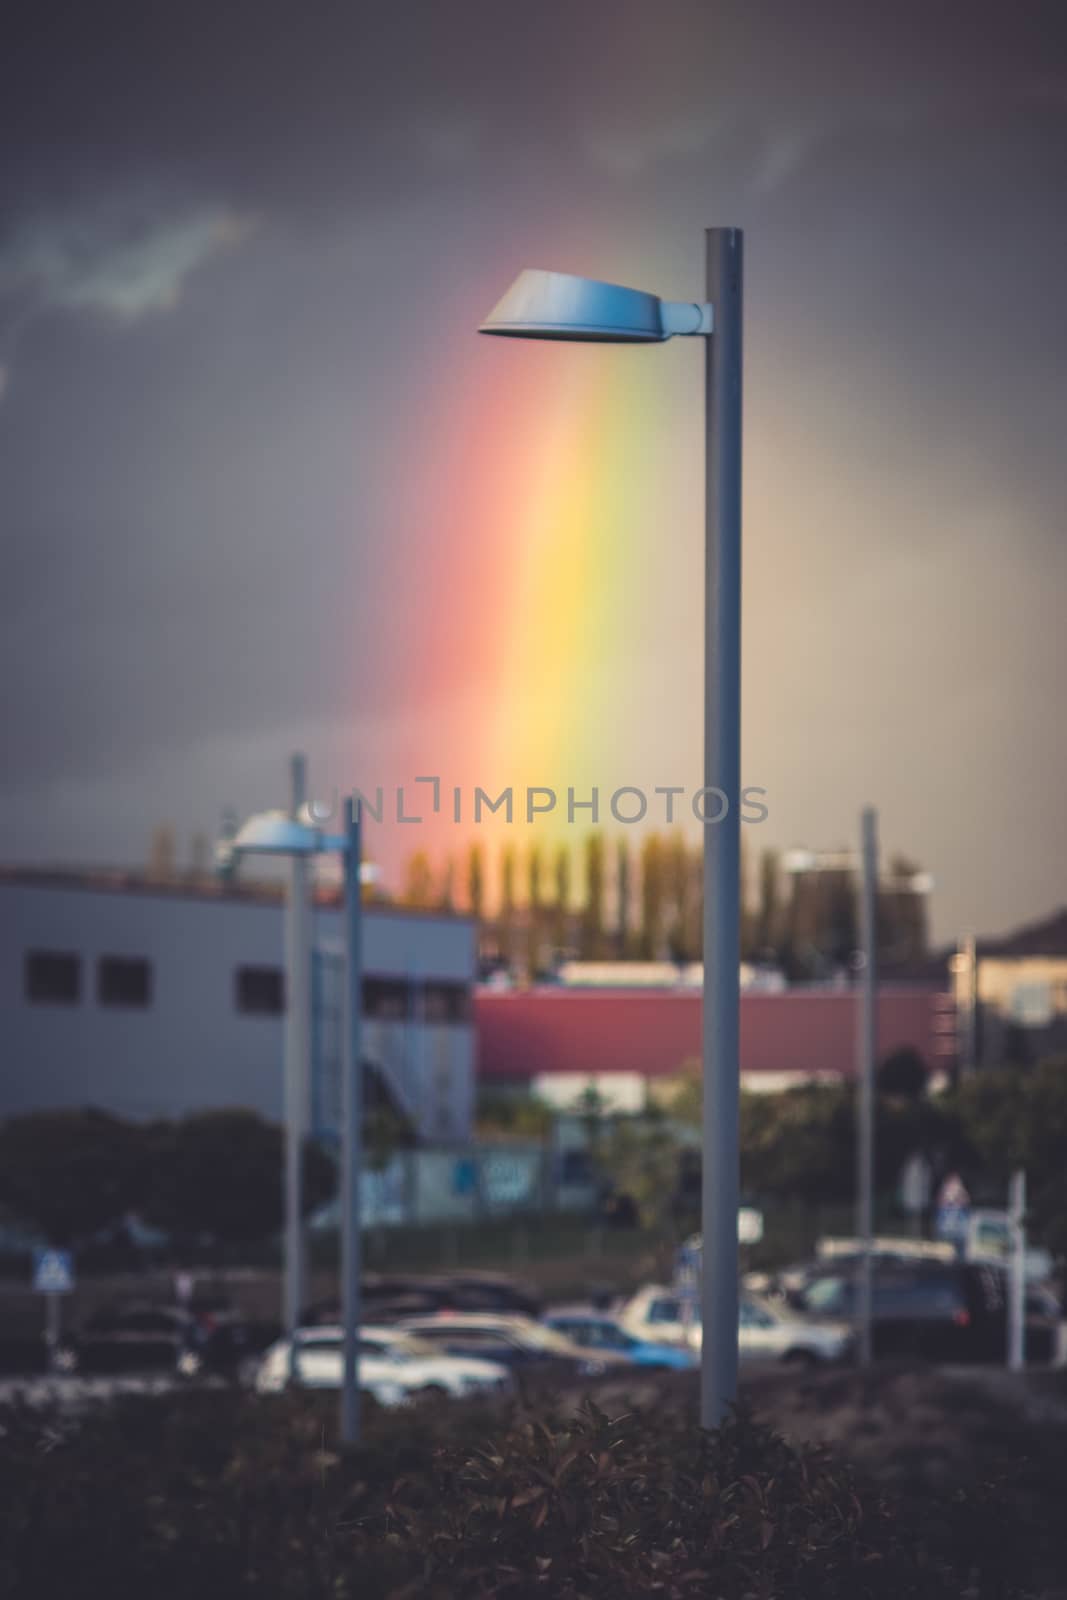 Streetlight illuminating with rainbow colors by mikelju